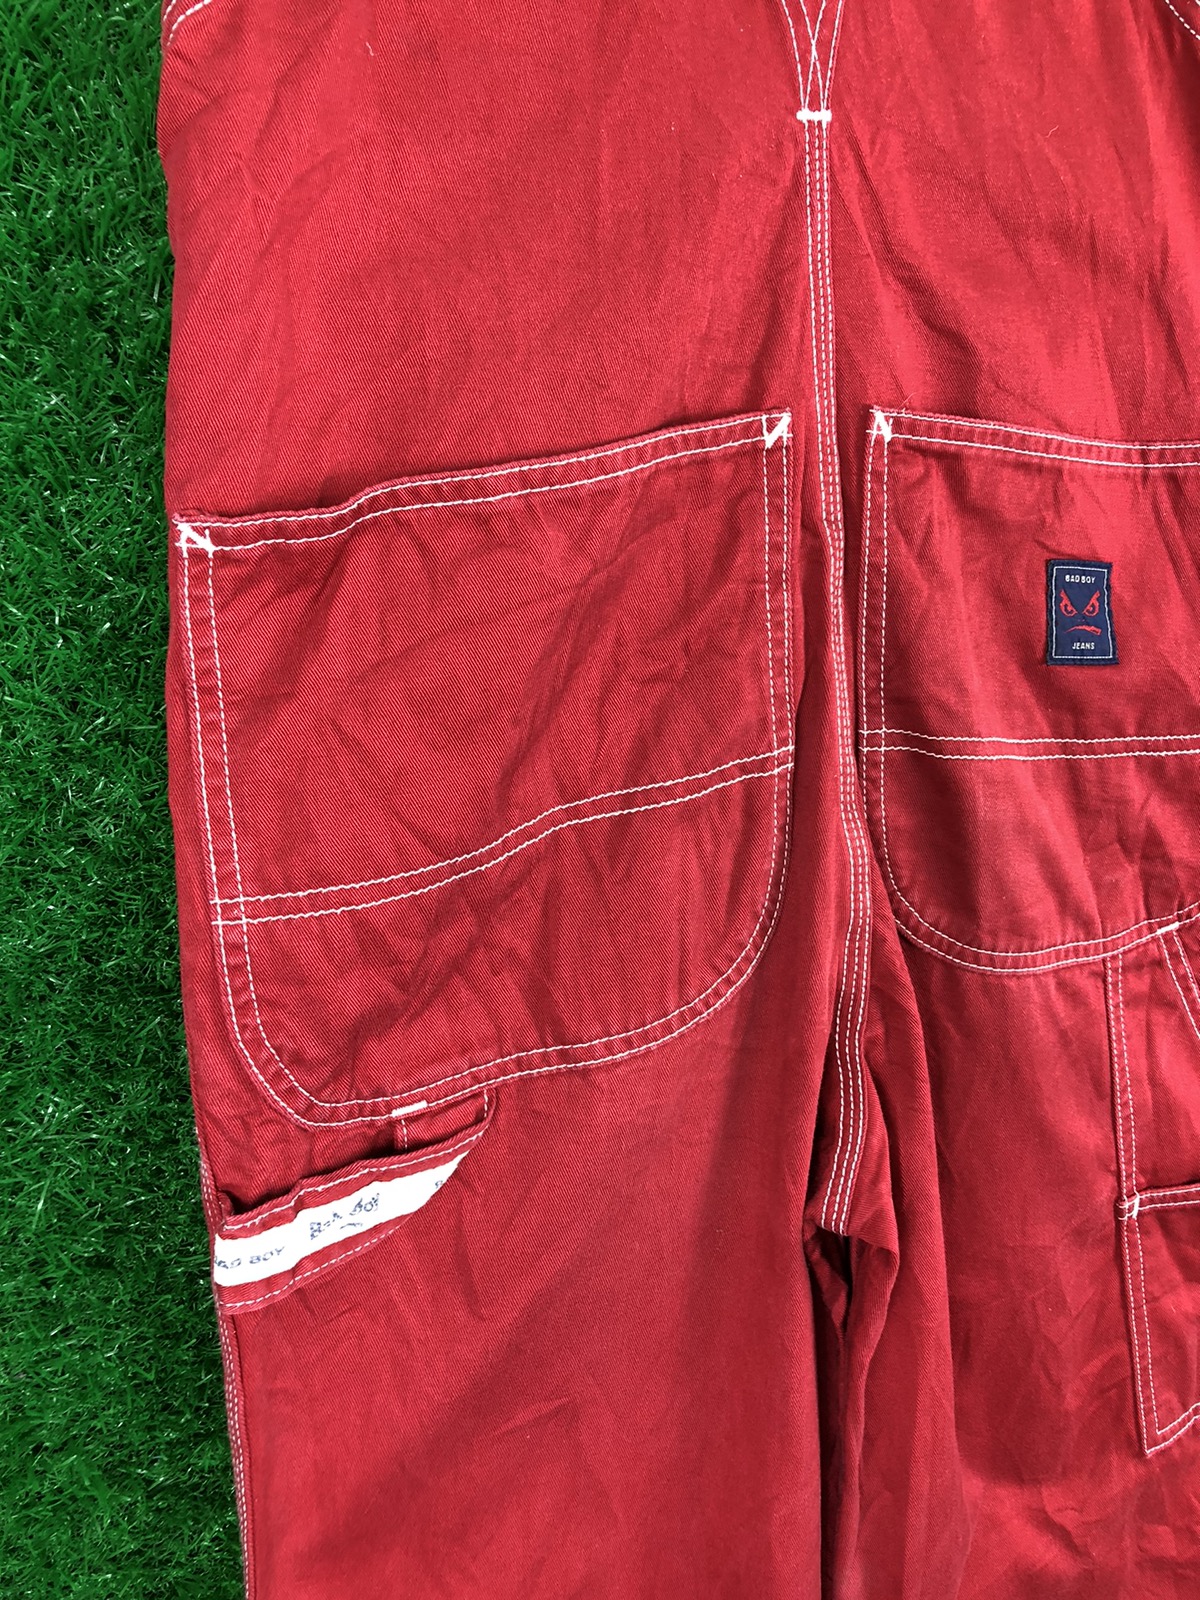 Vintage - Vintage 90's Bad Boy Jeans Red Overall Denim Workwear Style - 7